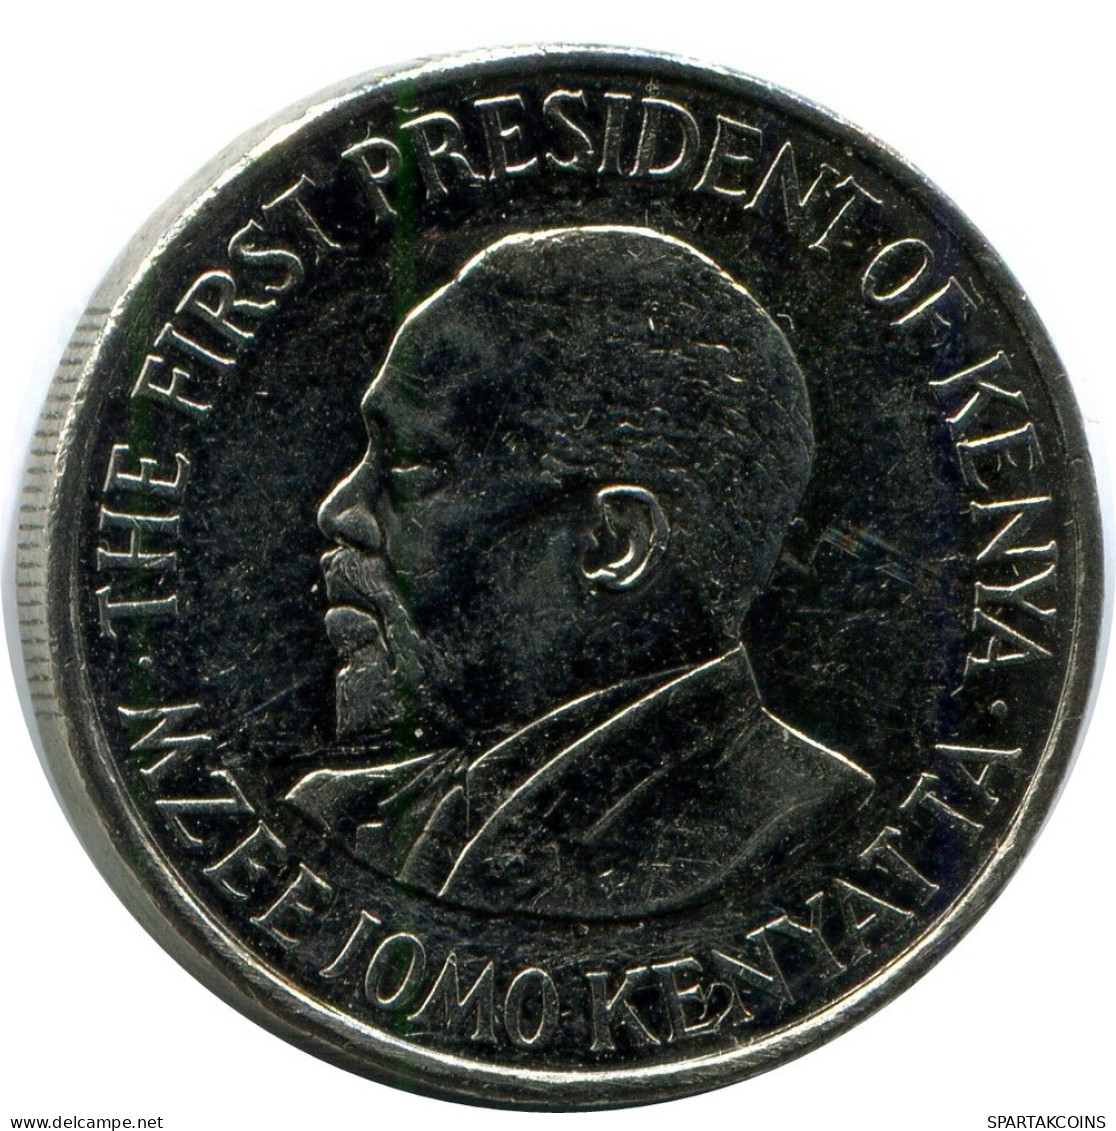 1 SHILLING 2005 KENYA Coin #AP896.U.A - Kenya